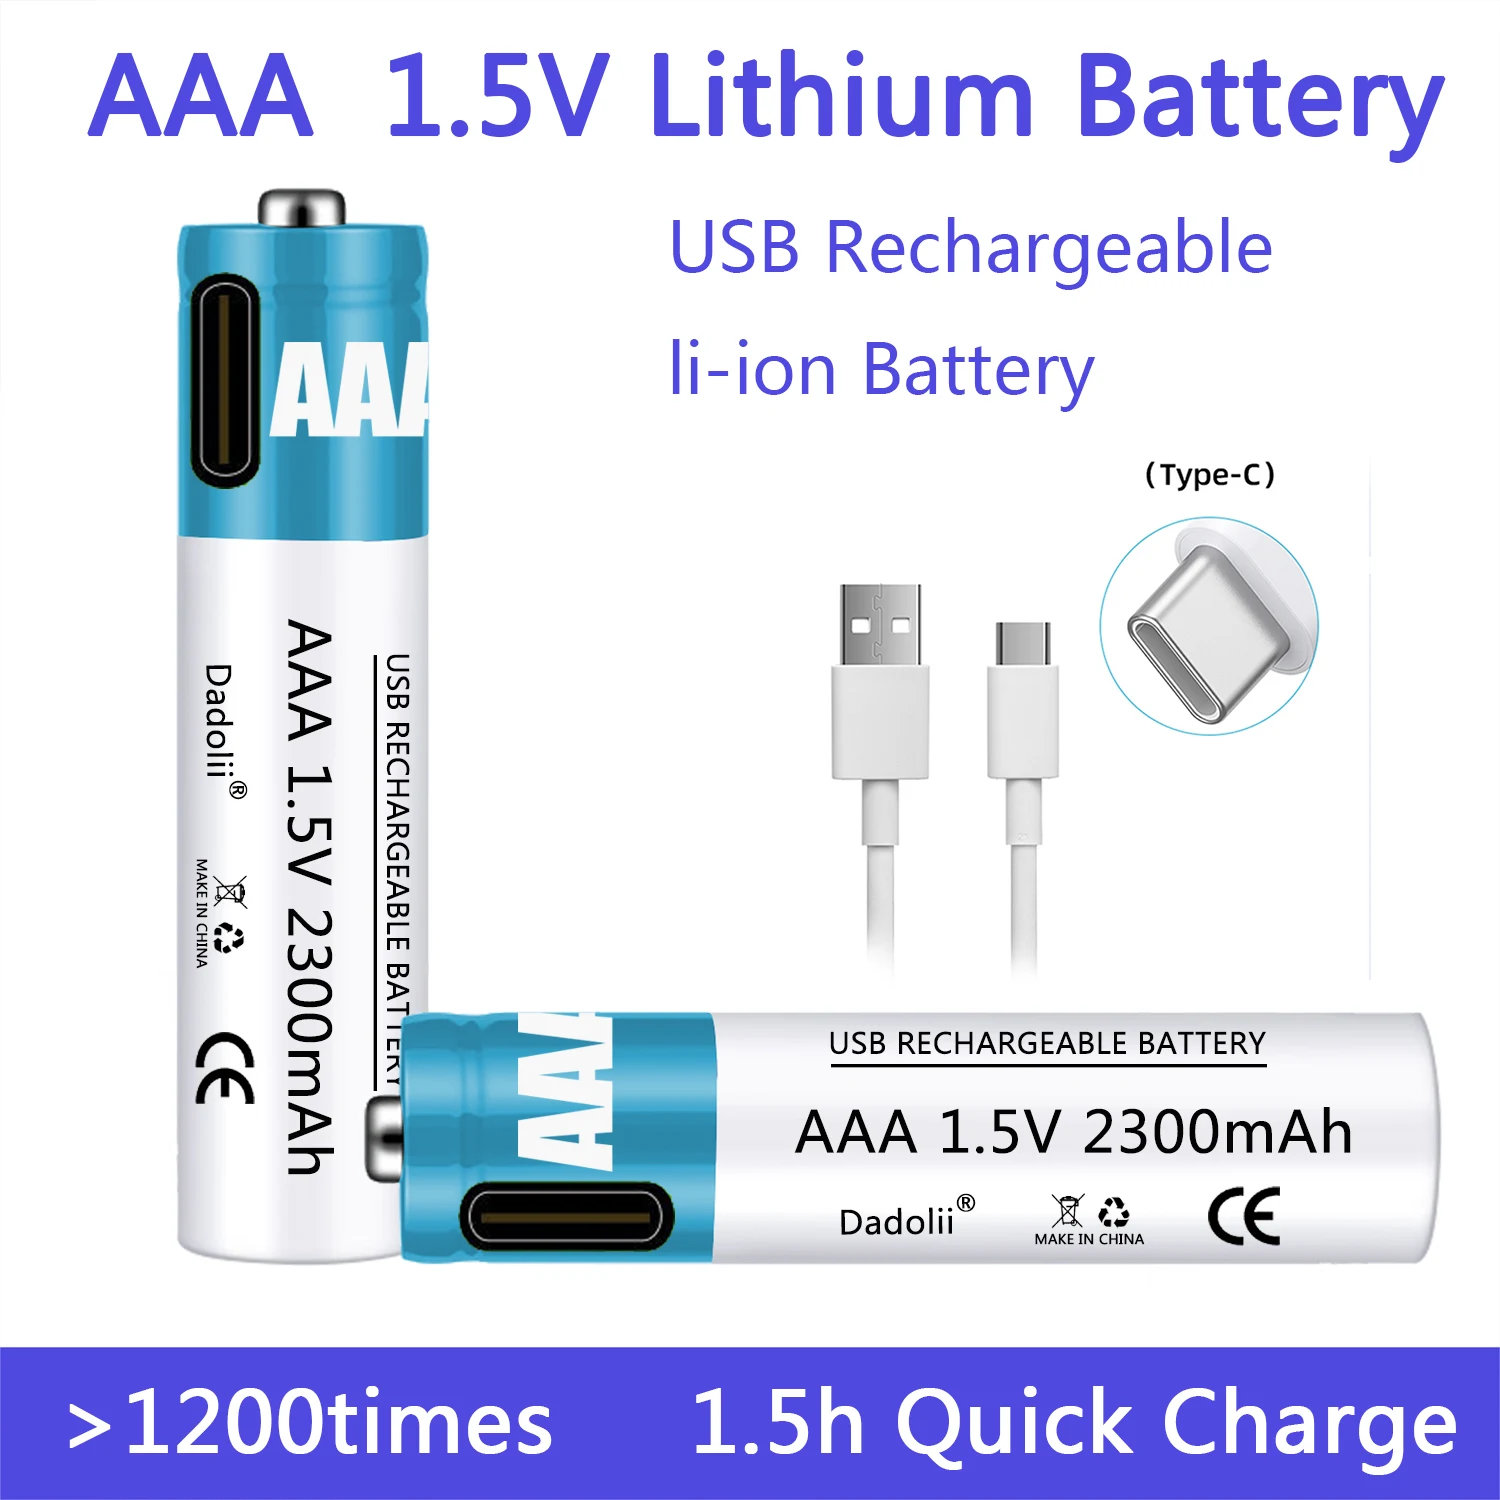 Новая Аккумуляторная Батарея 1.5 V AAA 2300mAh Литий-Полимерная Аккумуляторная Батарея AAA Быстрая Зарядка по USB-кабелю Type-C - 0